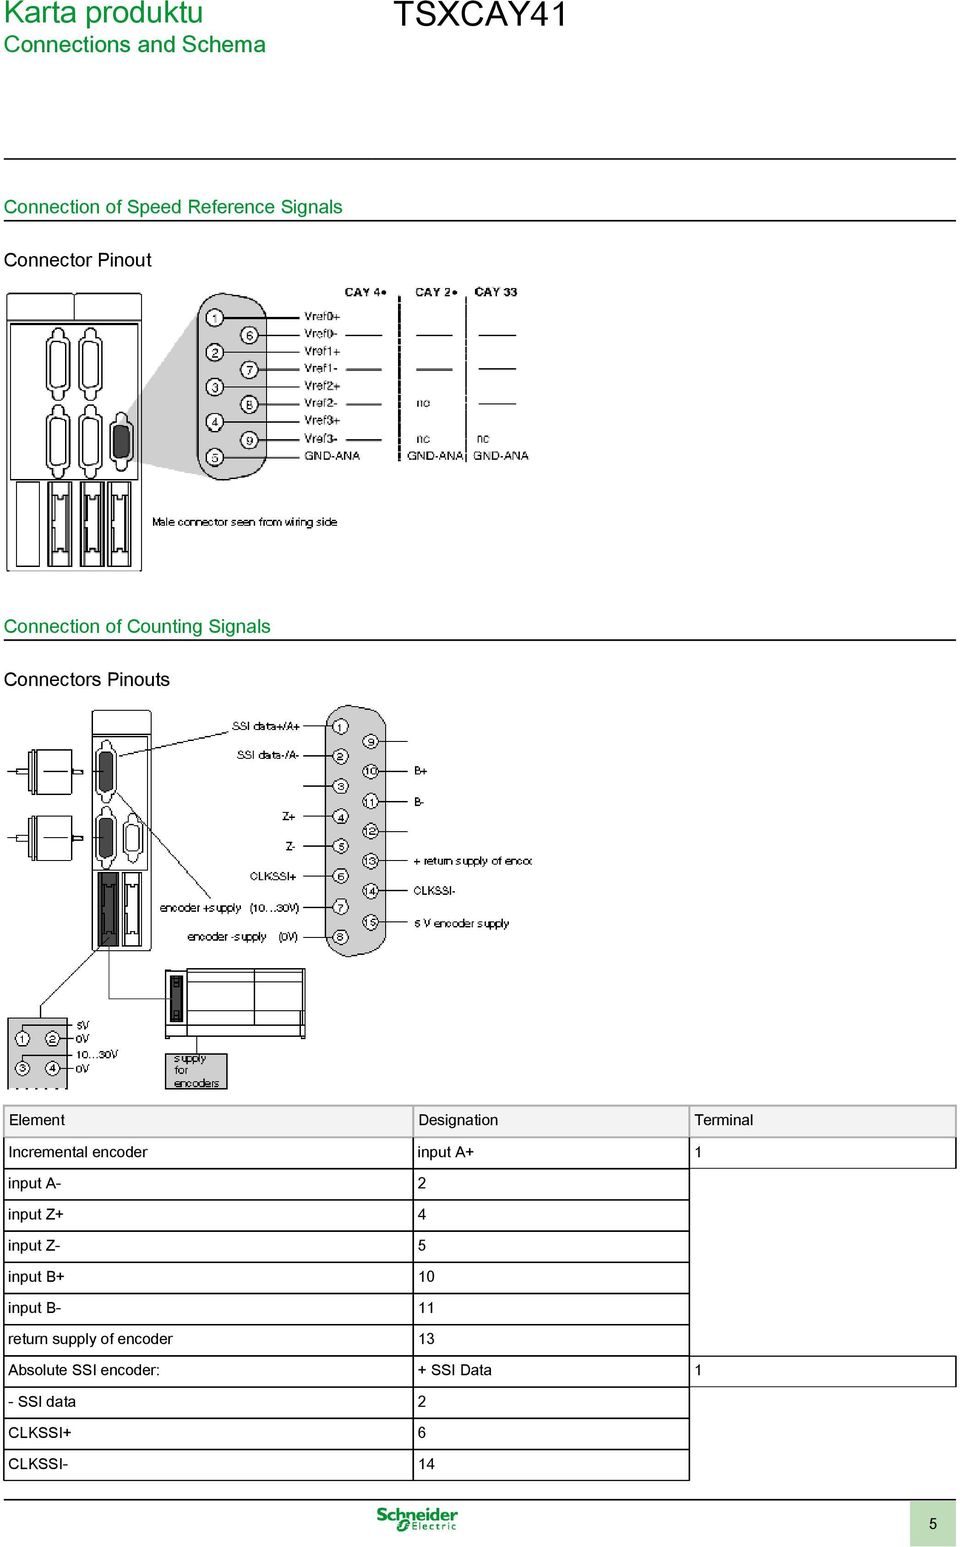 Terminal Incremental encoder input A+ 1 input A- 2 input Z+ 4 input Z- 5 input B+ 10 input